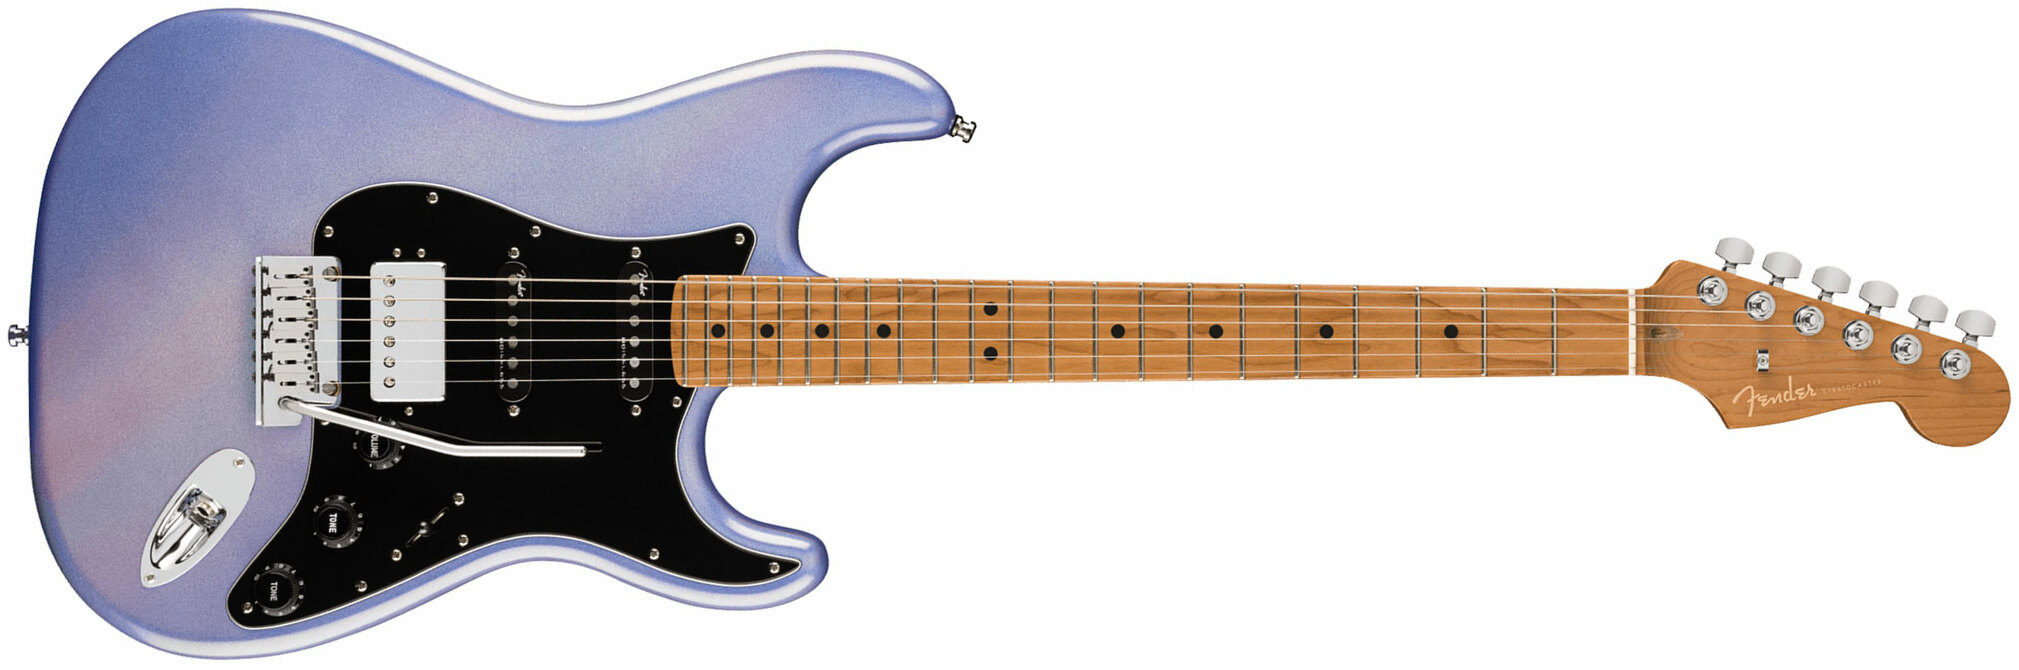 Fender Strat 70th Anniversary American Ultra Ltd Usa Hss Trem Mn - Amethyst - Guitarra eléctrica con forma de str. - Main picture